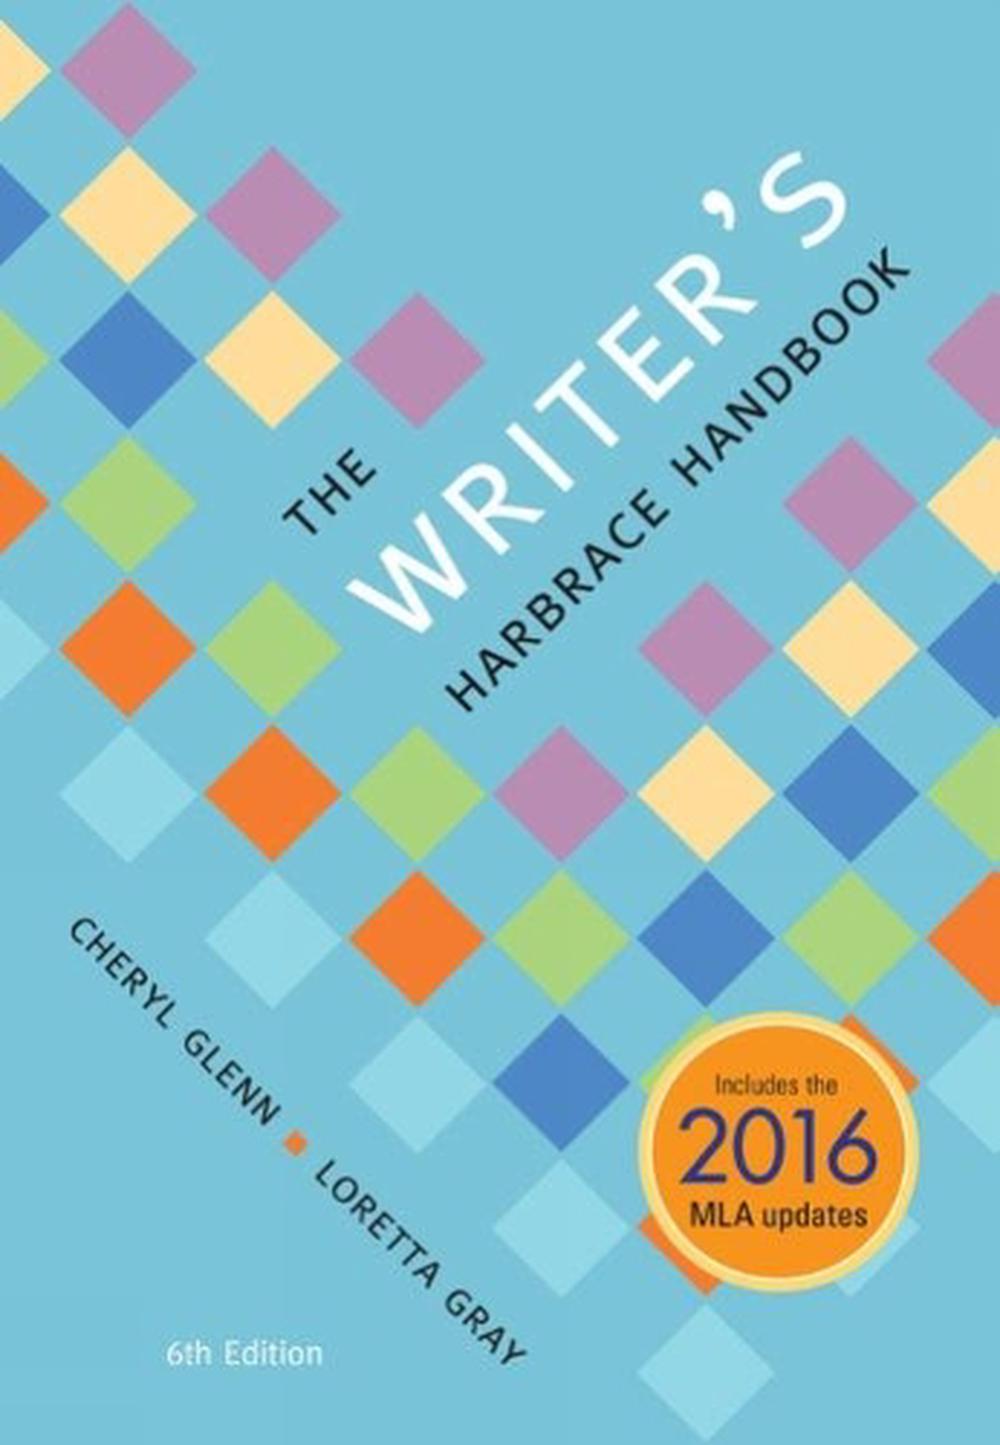 The Writer's Harbrace Handbook, 2016 MLA Update by Cheryl Glenn